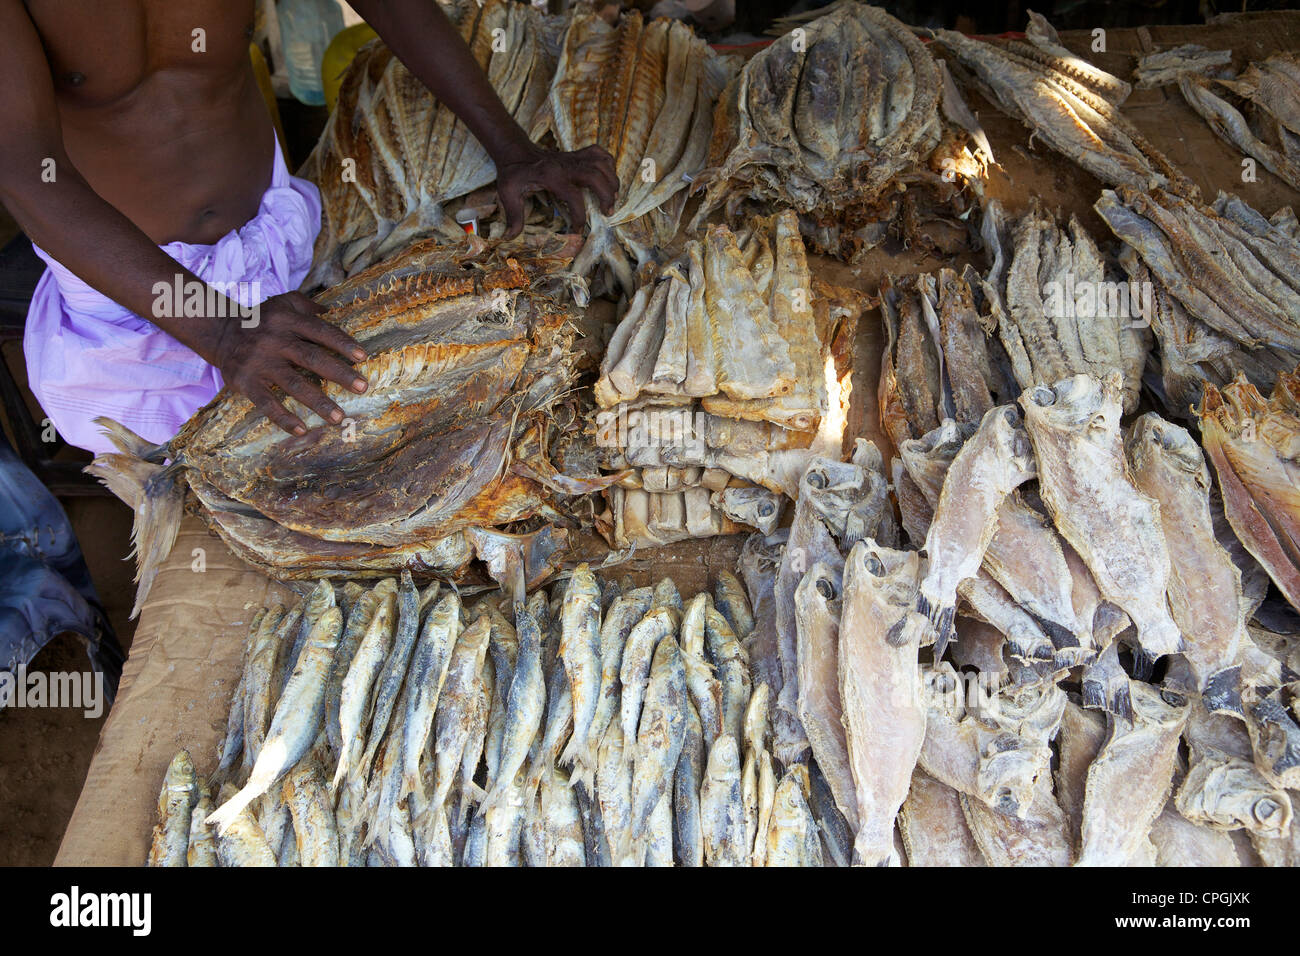 Market stall selling dried fish, Nilaveli, Trincomalee, Sri Lanka, Asia Stock Photo